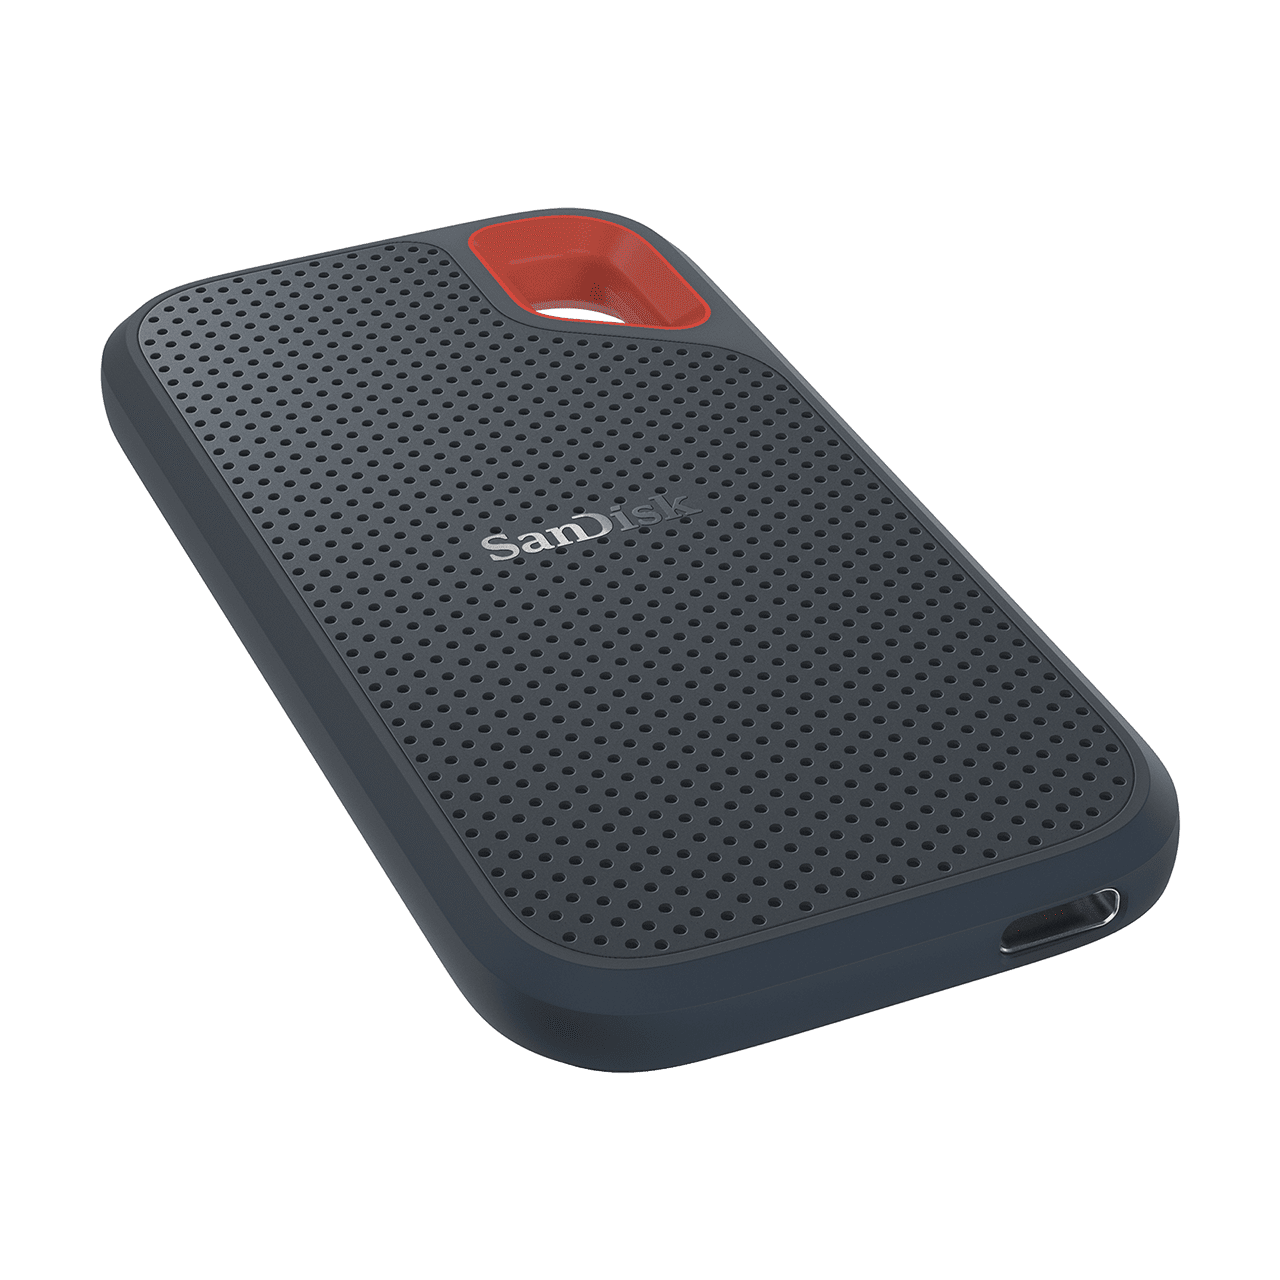 SanDisk Extreme Portable SSD | Western 